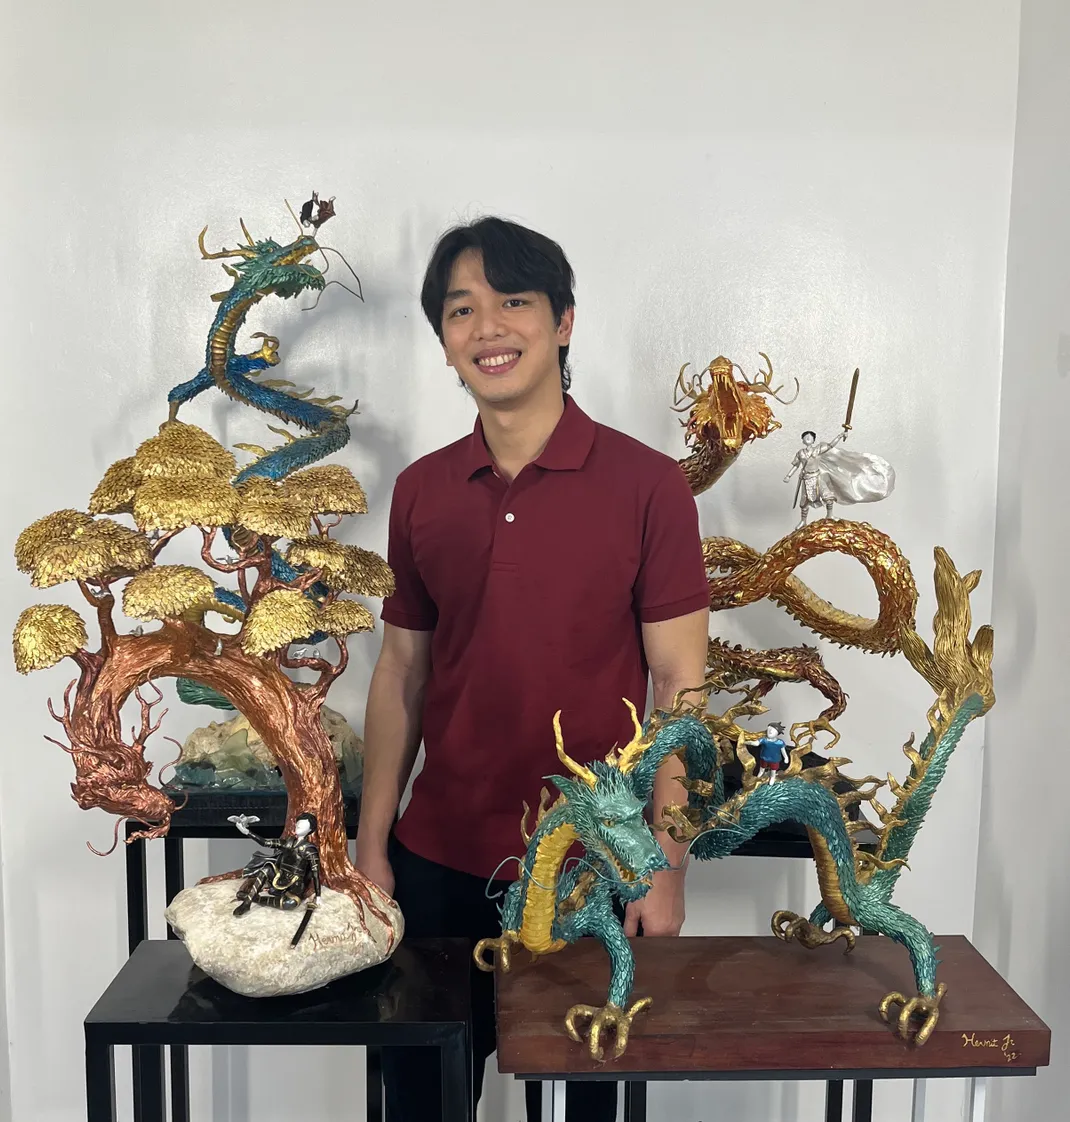 drybrush Gallery - Philippine/Local artists - Herminio Tan -  Sculptor